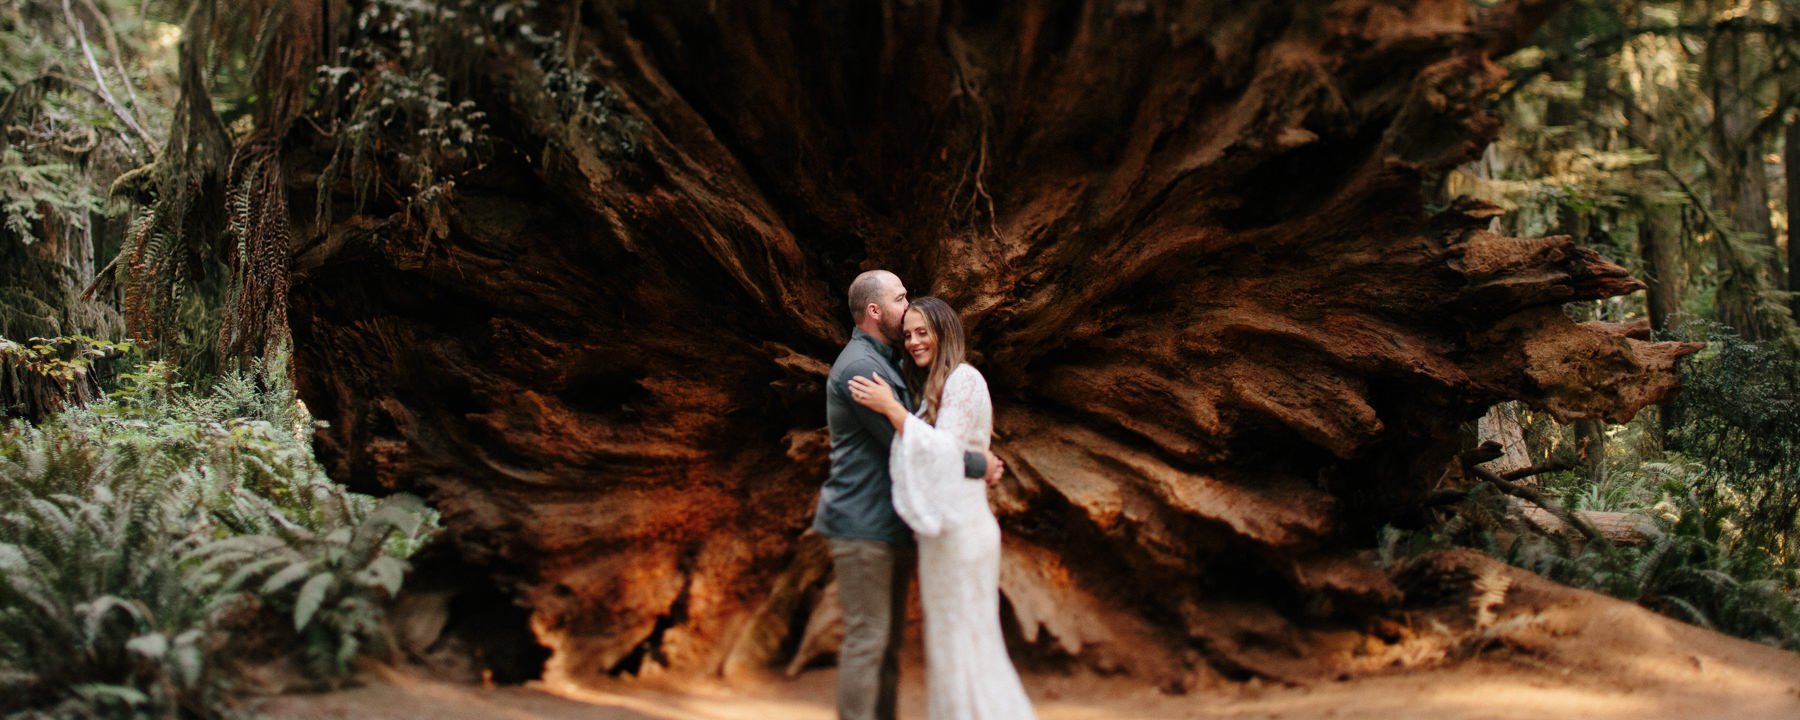 jedediah-smith-redwoods-southern-oregon-coast-wedding-elopement-photographer-michael-liedtke-020.jpg